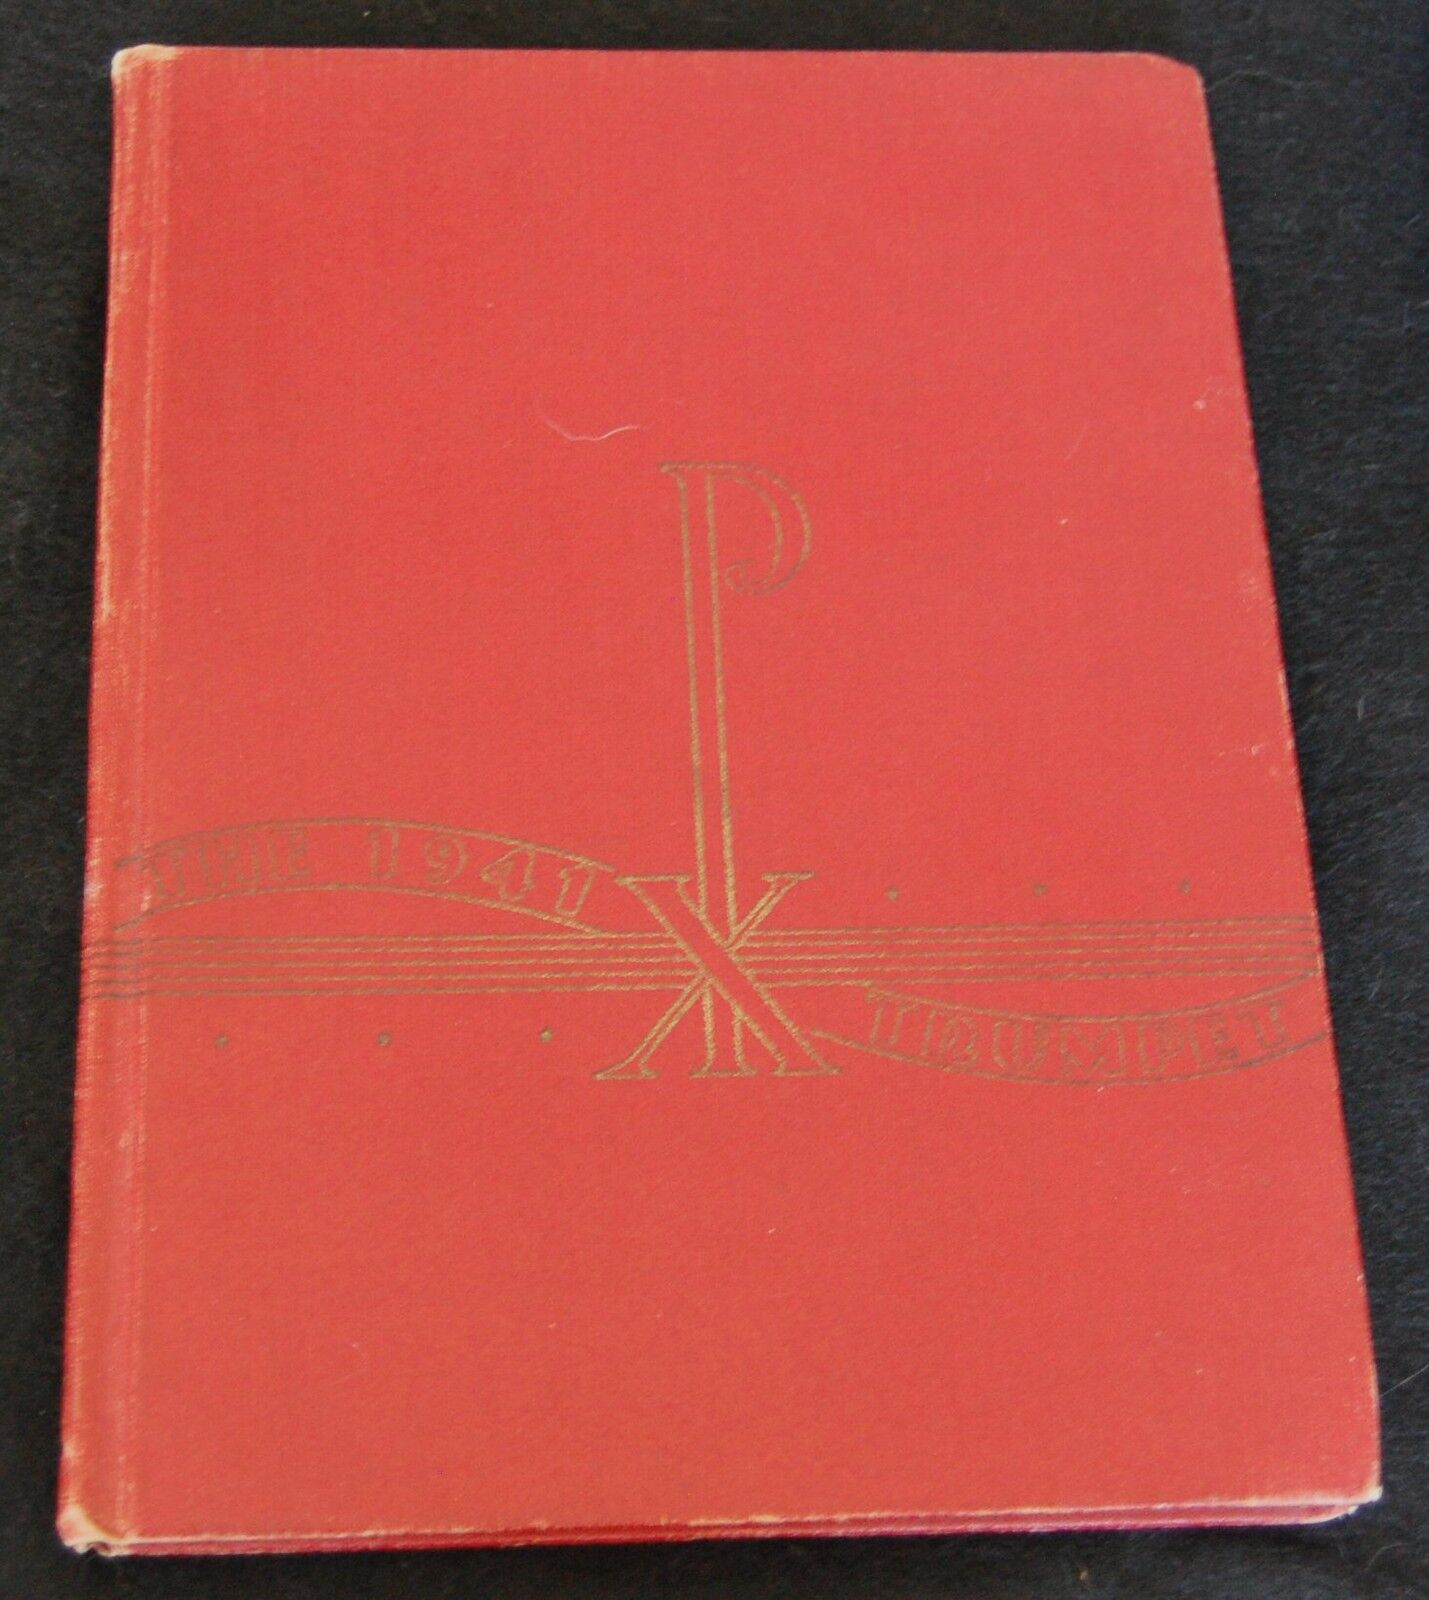 Aquinas High School 1941 Yearbook (The Trumpet), La Crosse WI